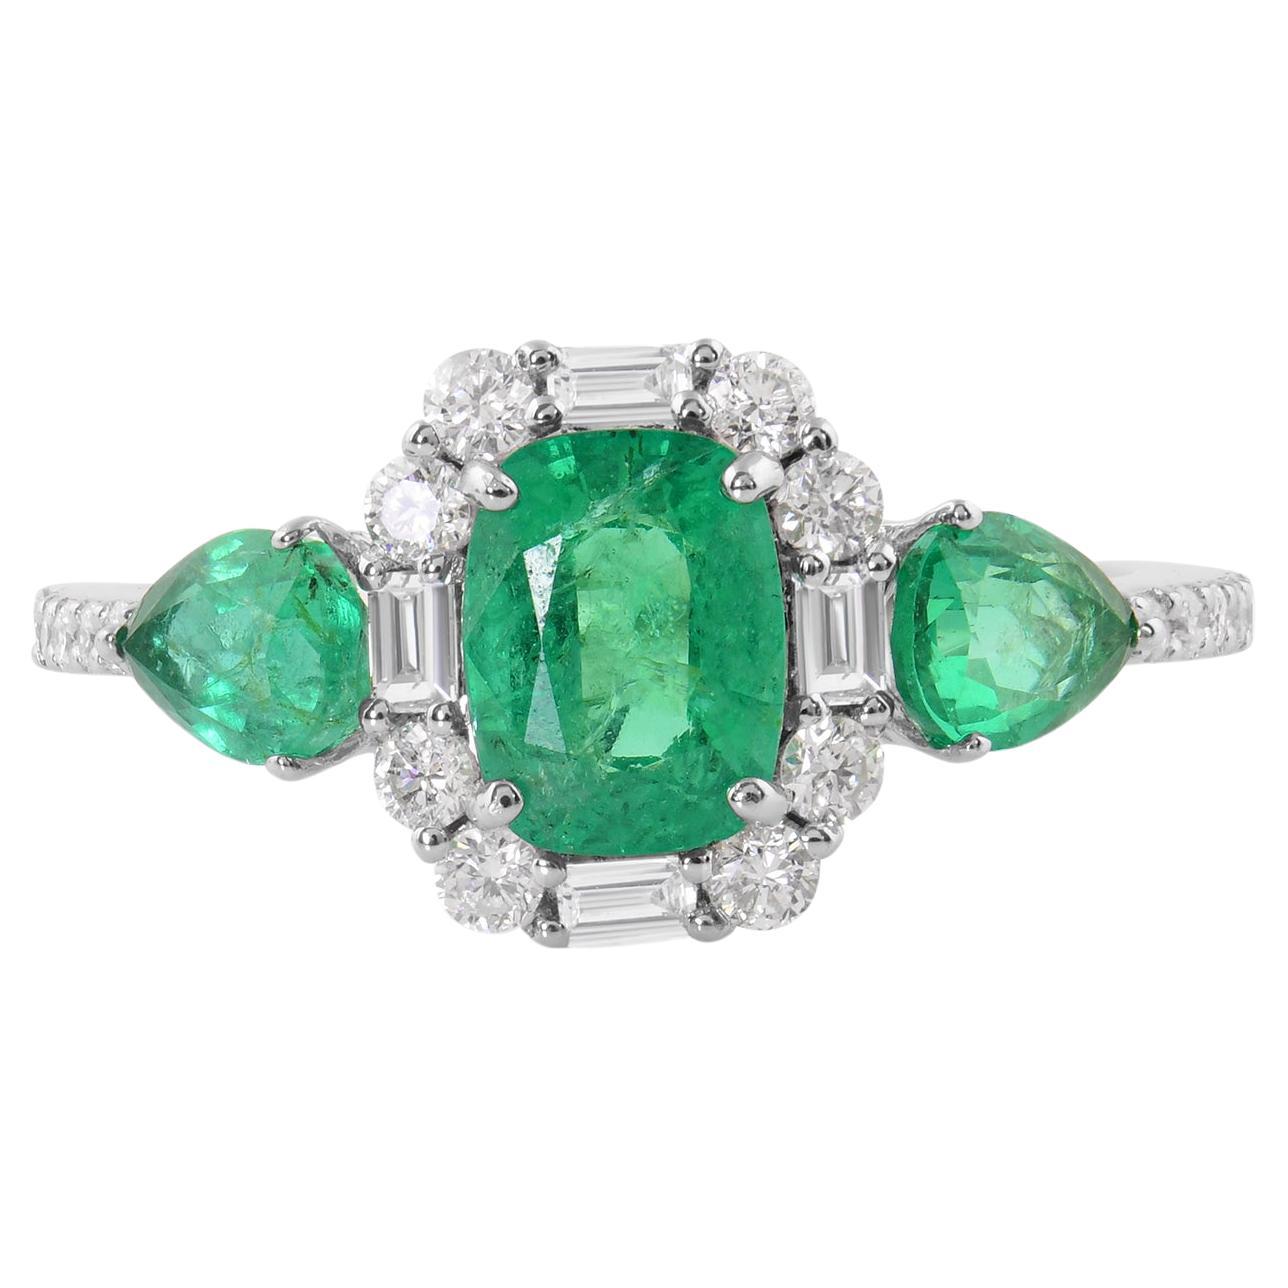 Zambian Emerald Gemstone Ring Diamond 18 Karat White Gold Handmade Jewelry For Sale